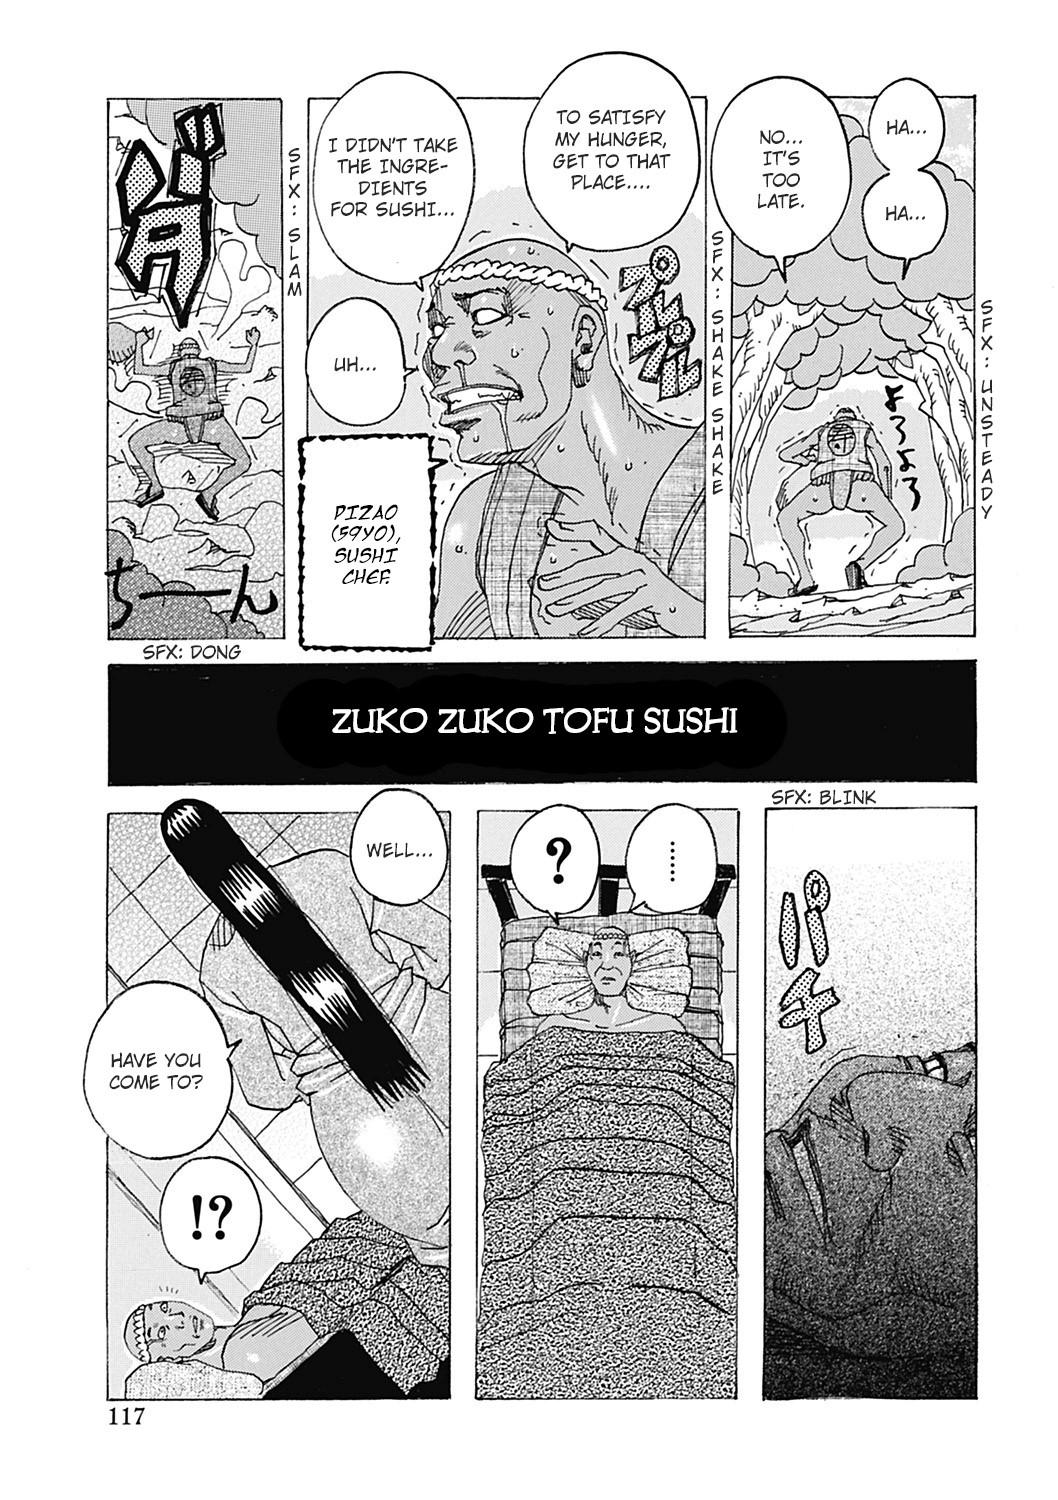 Macho Zukozuko Tofu Sushi Gay Friend - Page 1